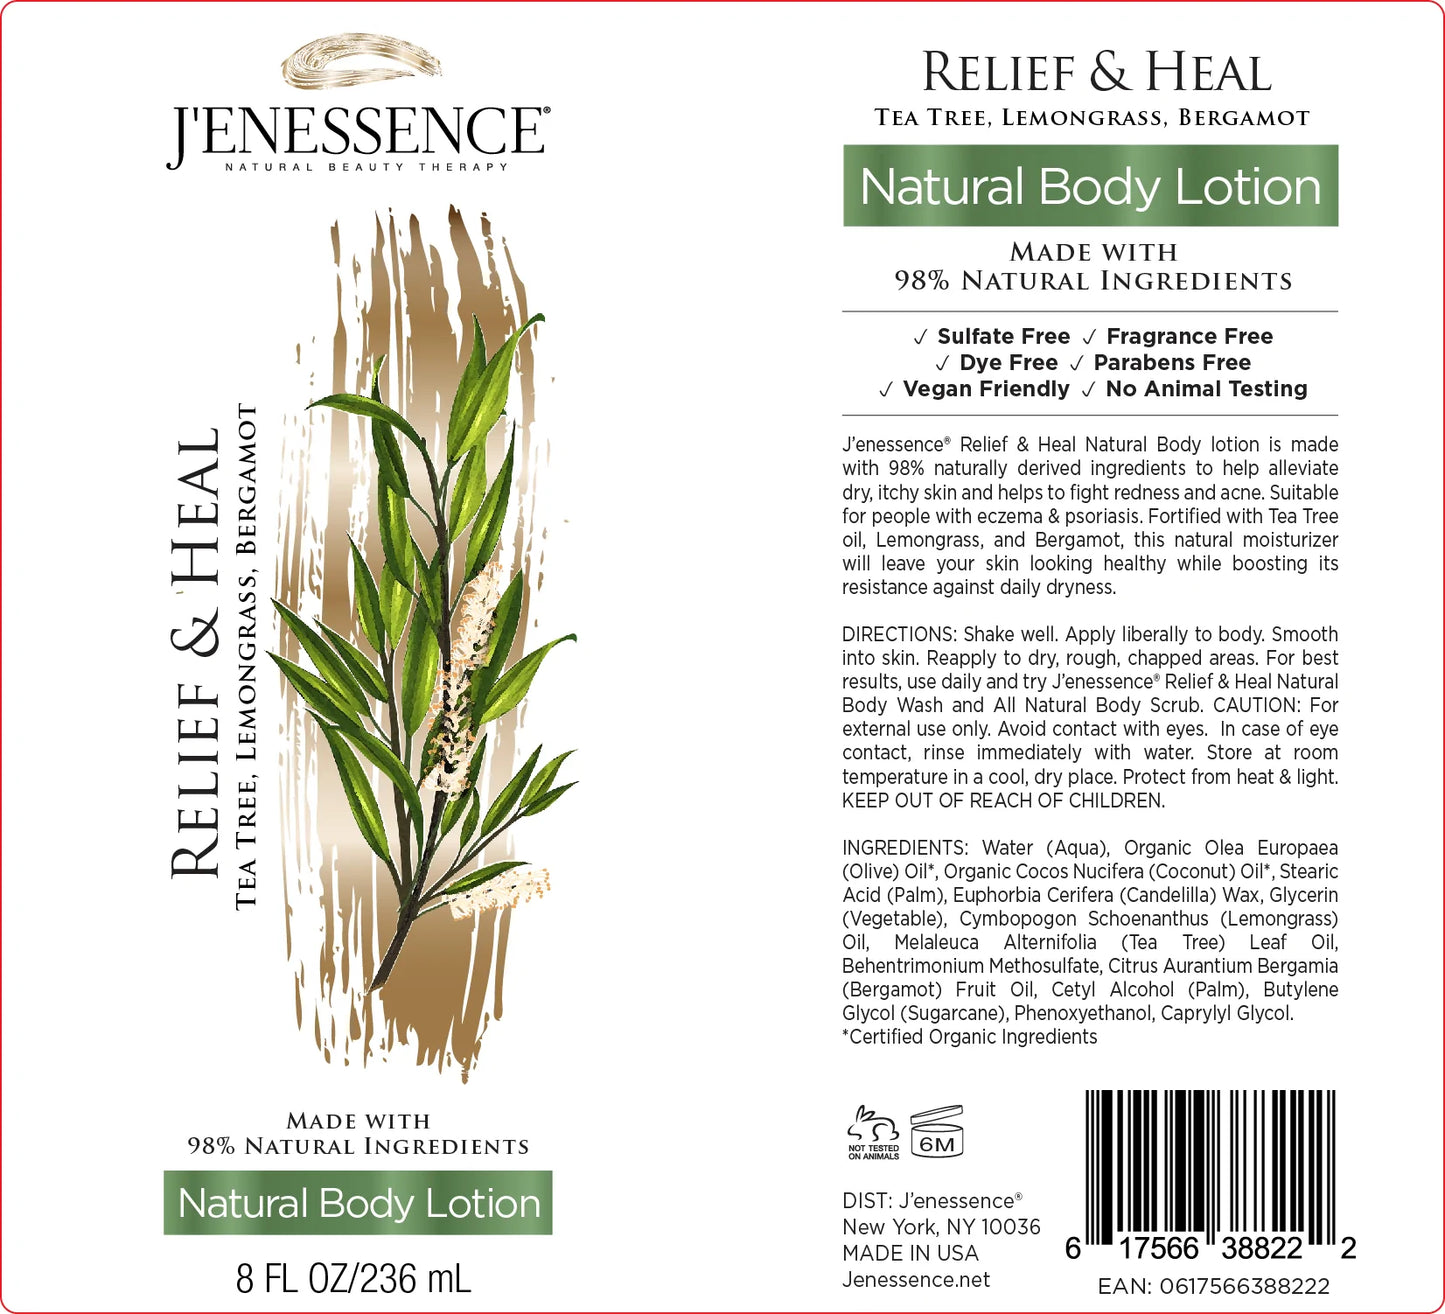 Relief & Heal 98% Natural Therapeutic Body Lotion (Lemongrass, Tea Tree, Bergamot)